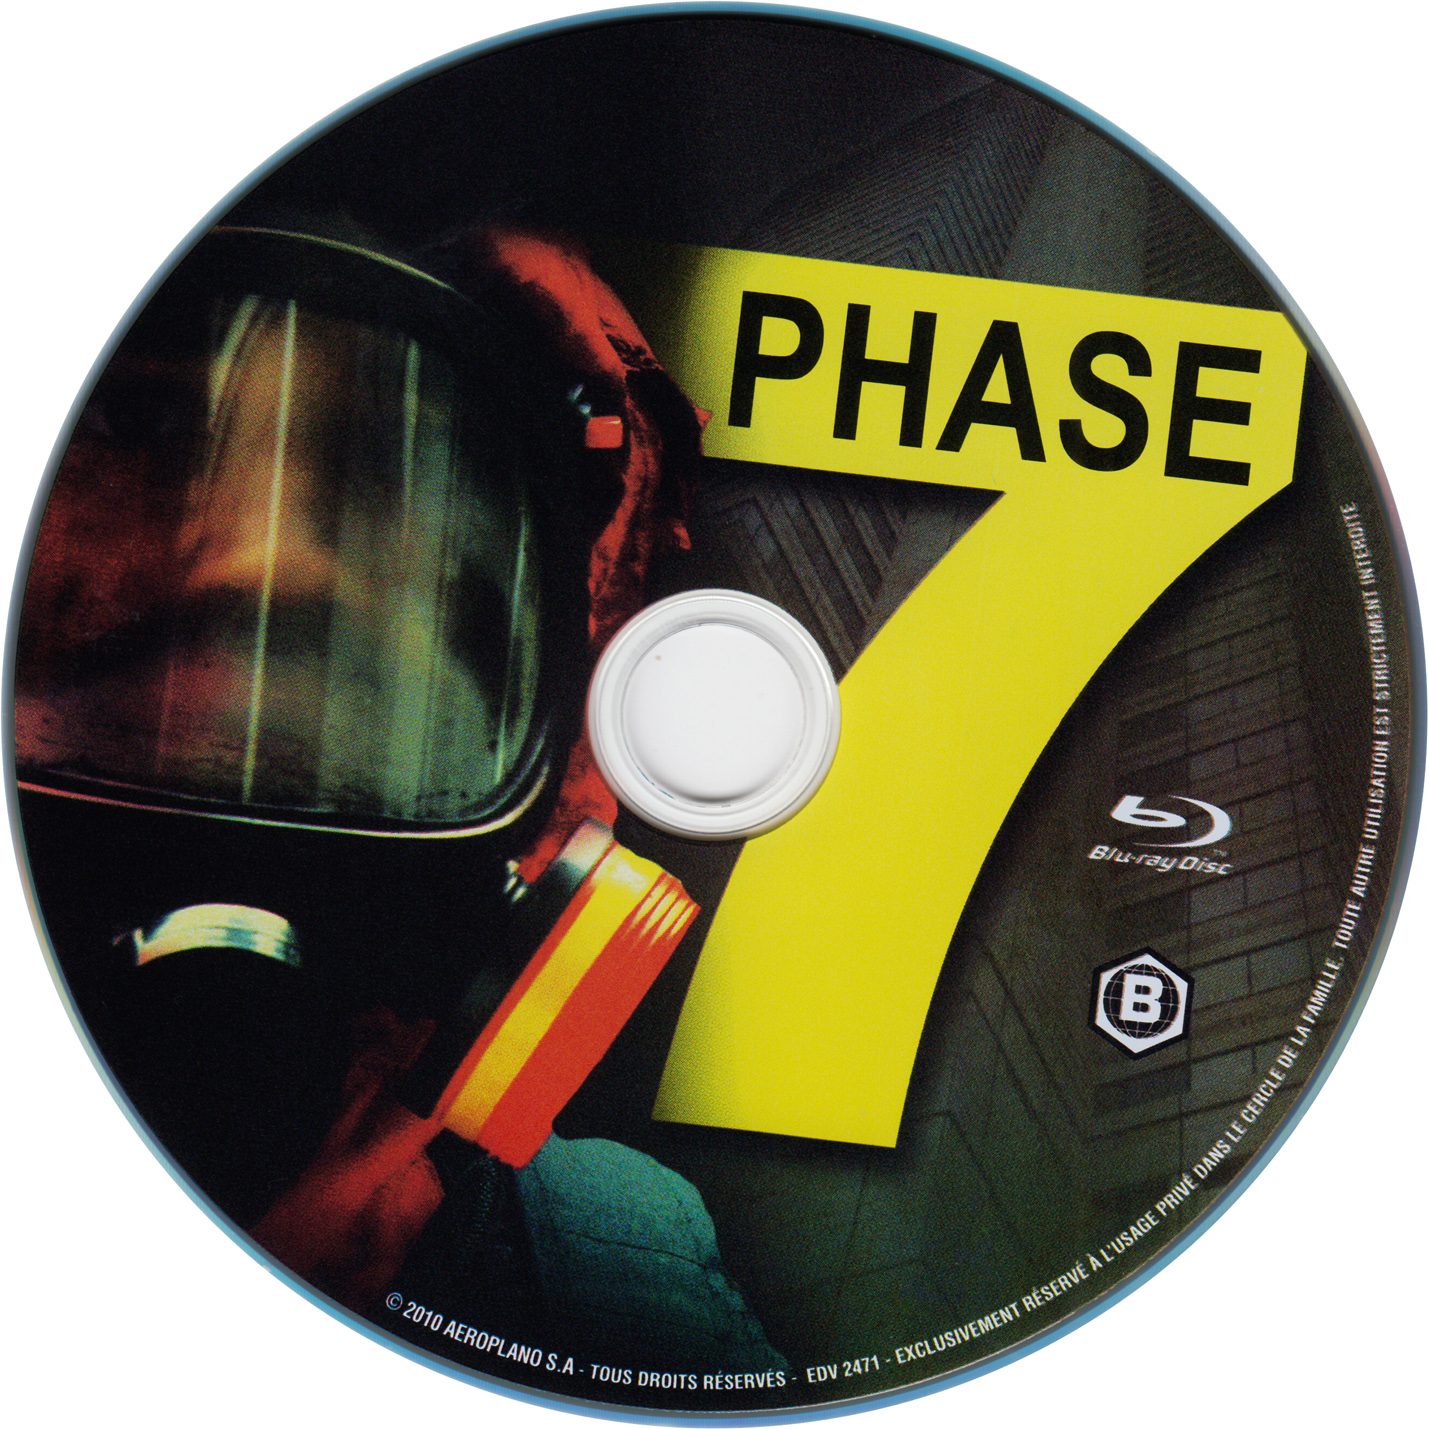 Phase 7 (BLU-RAY)